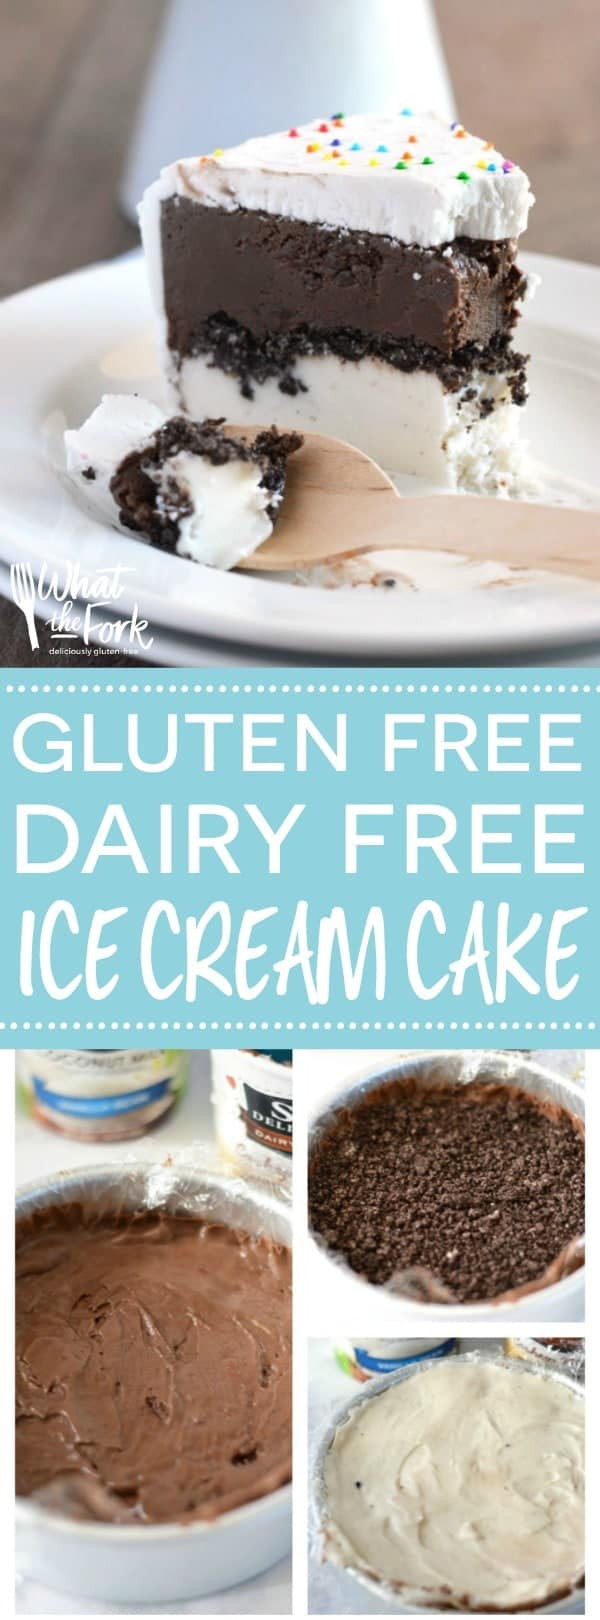 Wheat Free Dairy Free Recipes
 Gluten Free Dairy Free Freezer Cake What the Fork